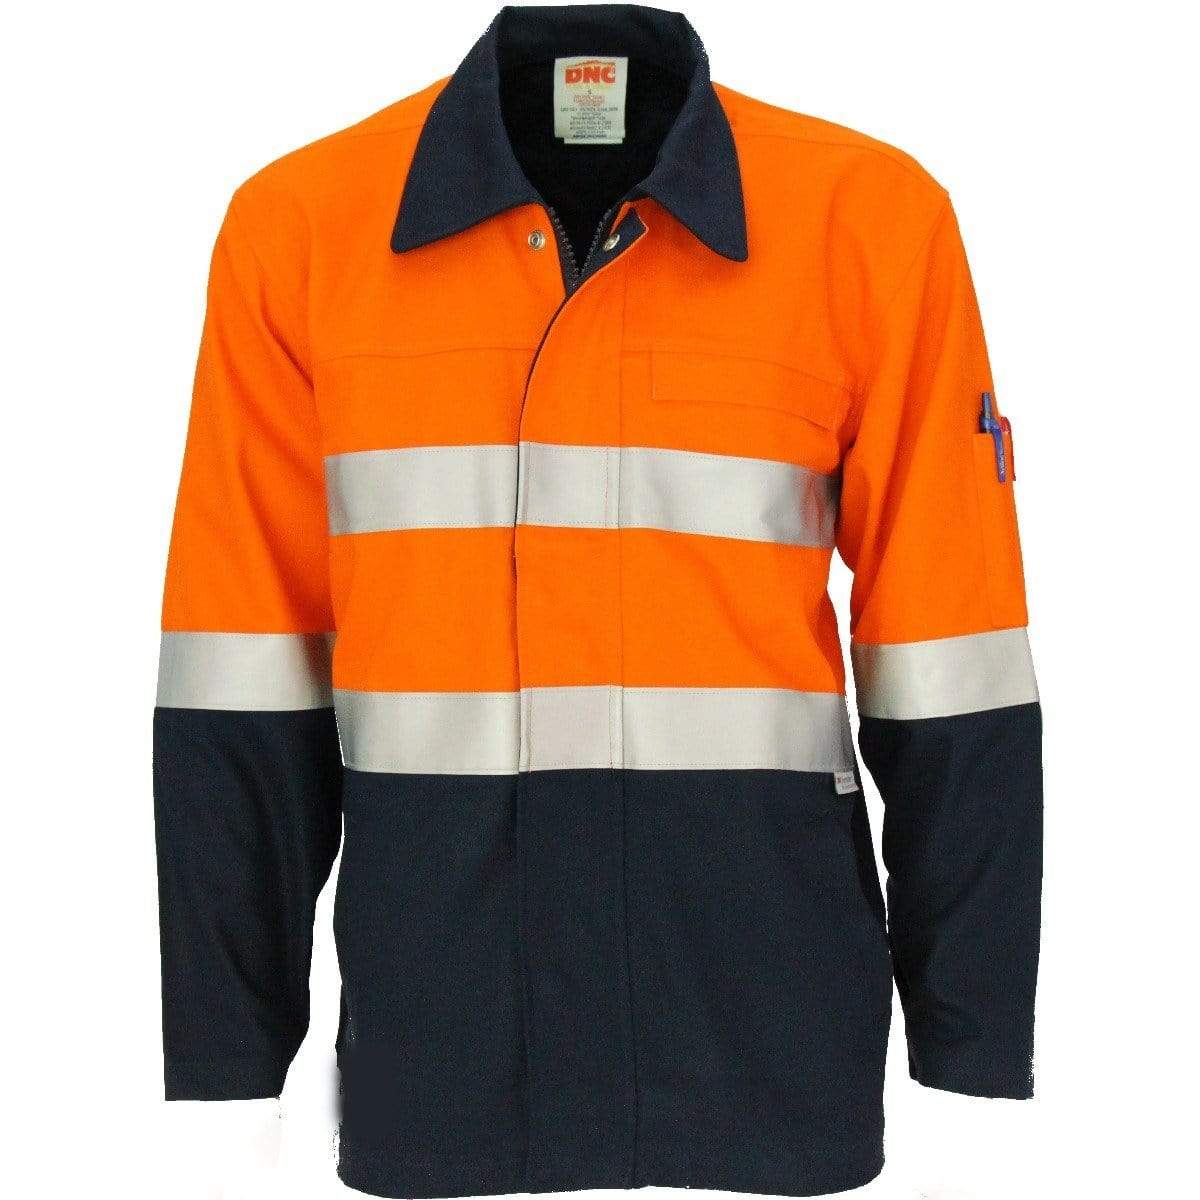 Dnc Workwear Patron Saint Flame Retardant Welder's Jacket - 3458 Work Wear DNC Workwear Orange/Navy XS 